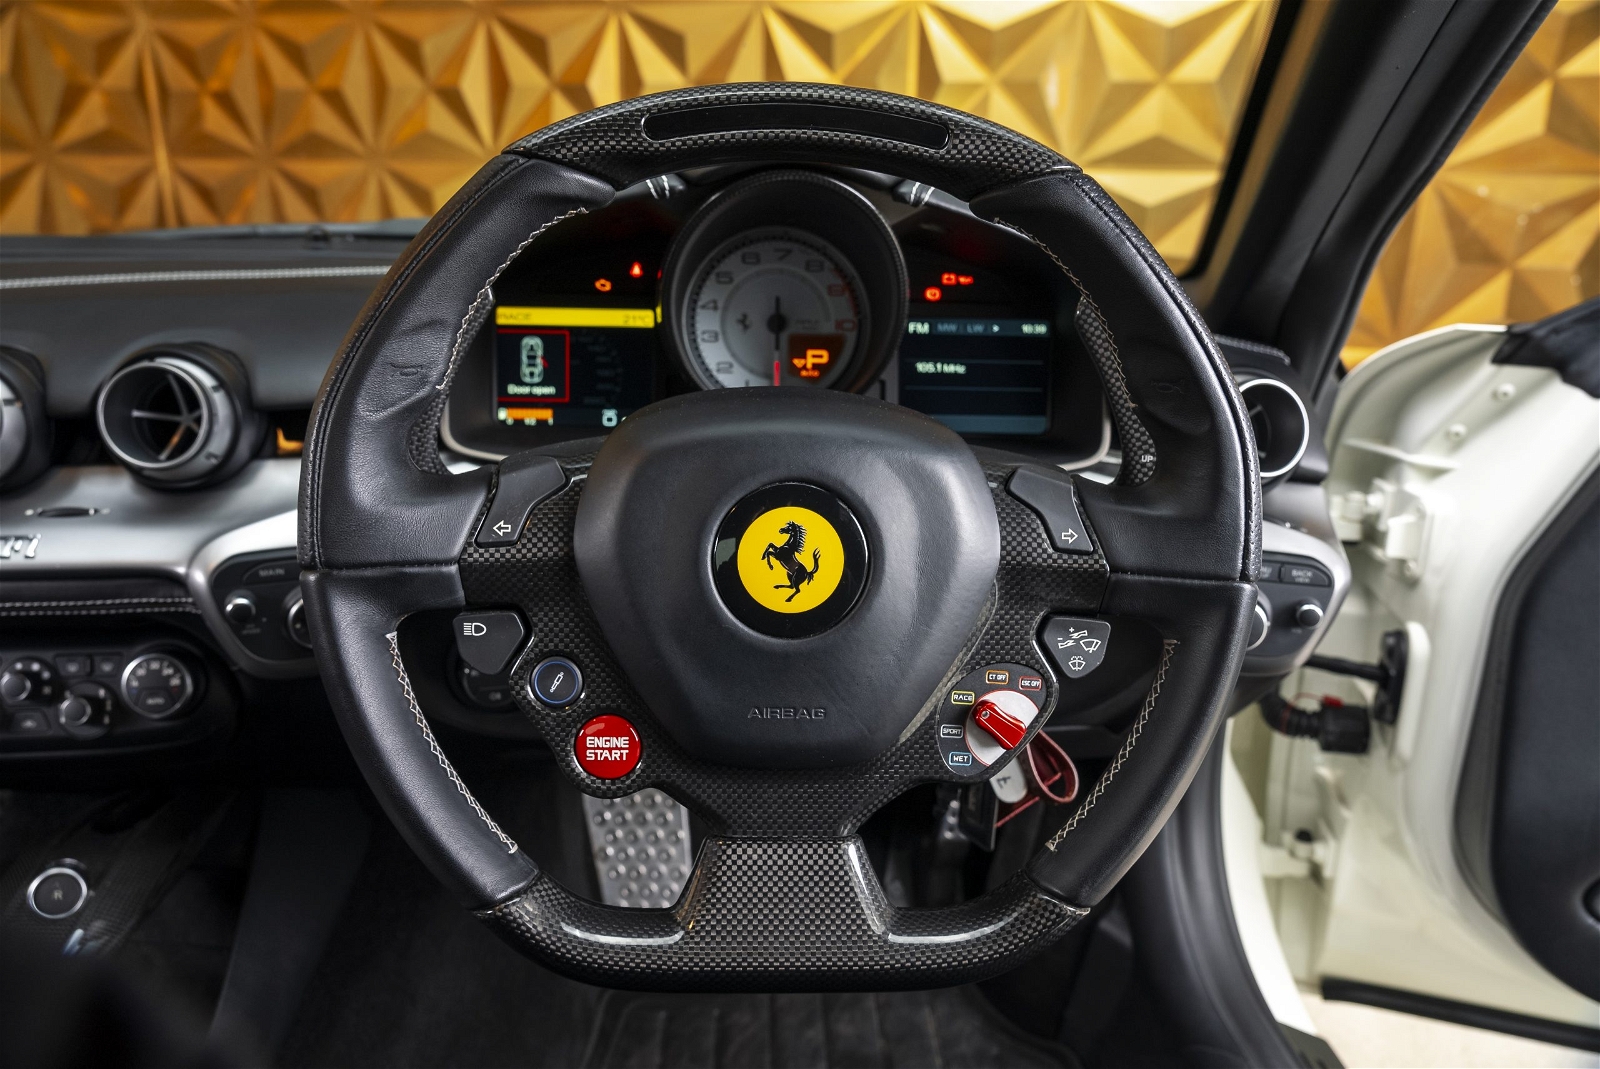 Gvelondon Ferrari F12 Berlinetta - Gvelondon